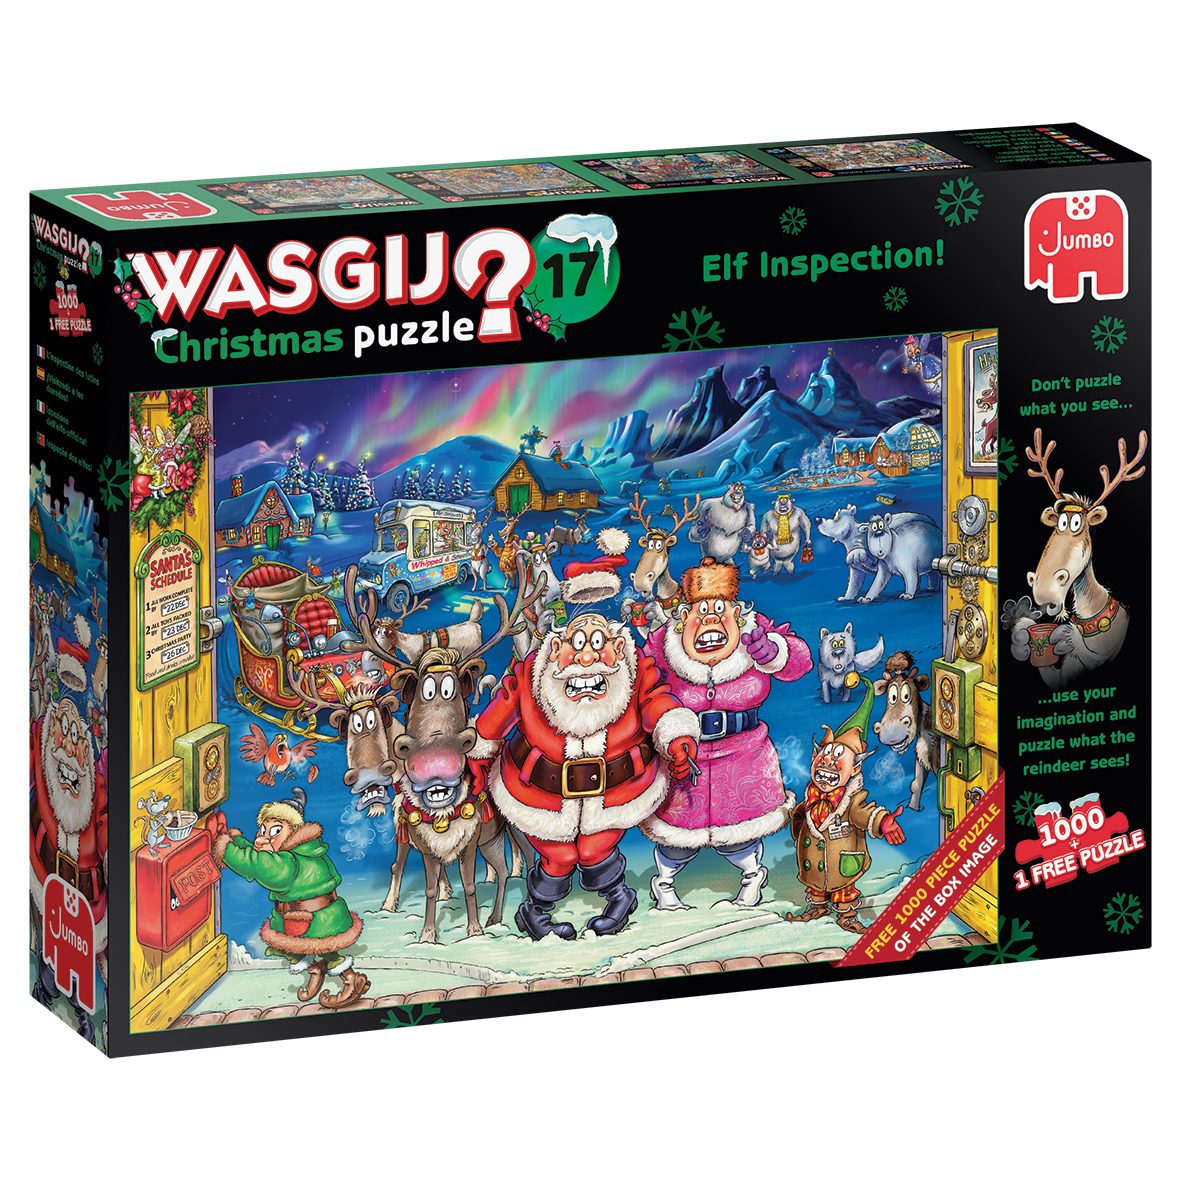 Christmas Puzzle Wasgij Spiele Jumbo Puzzleteile Inspection!, 1000 25003 - Elf 17